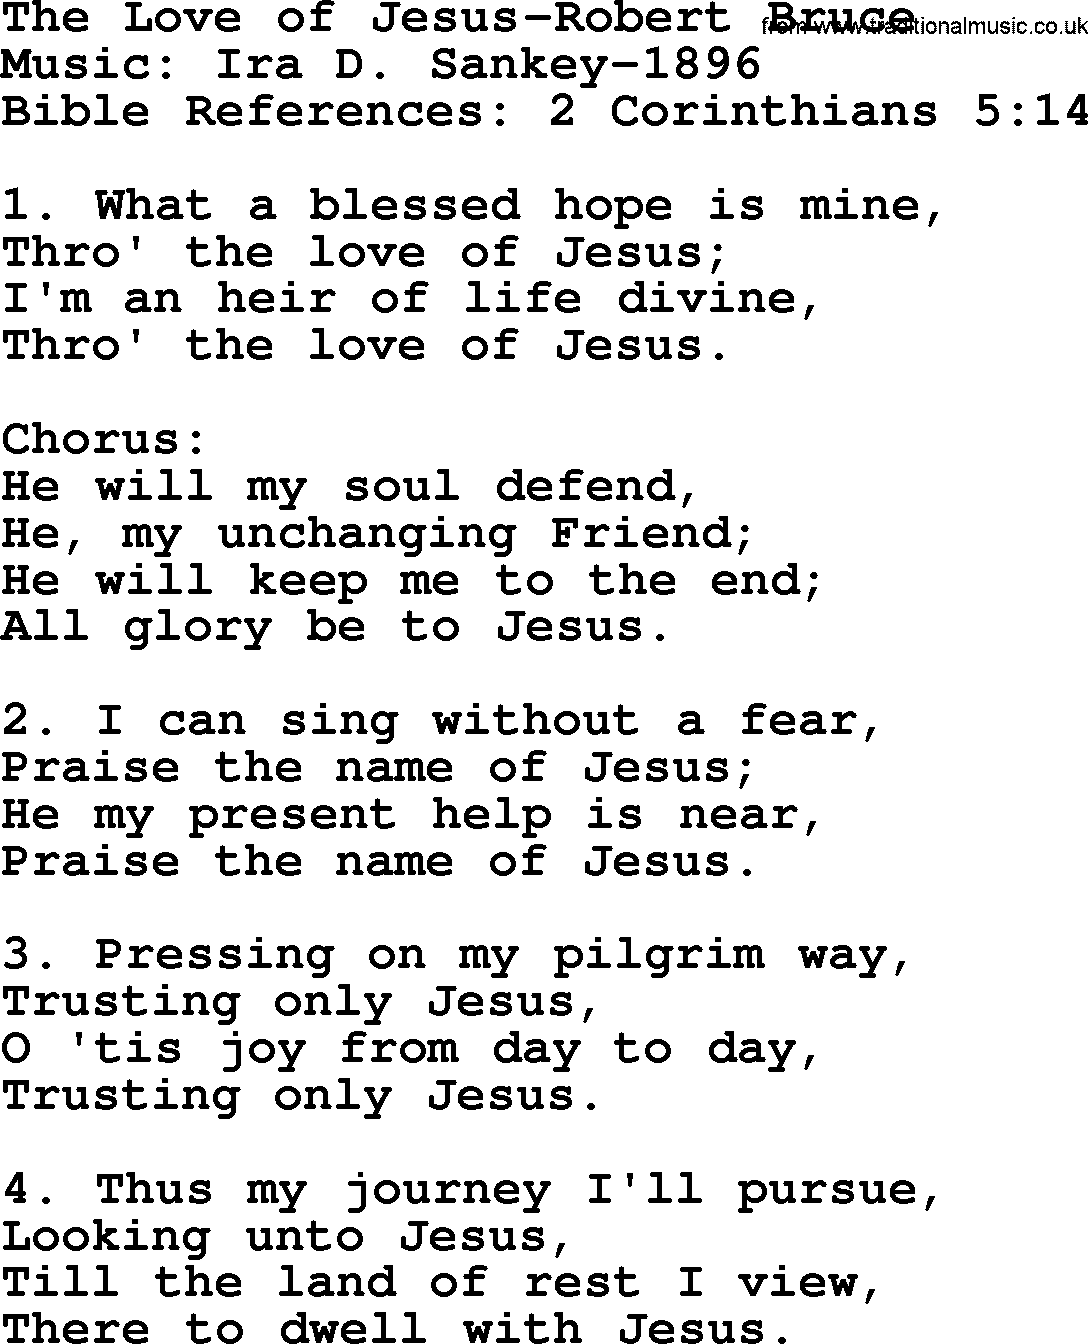 Ira Sankey hymn: The Love of Jesus-Robert Bruce-Ira Sankey, lyrics